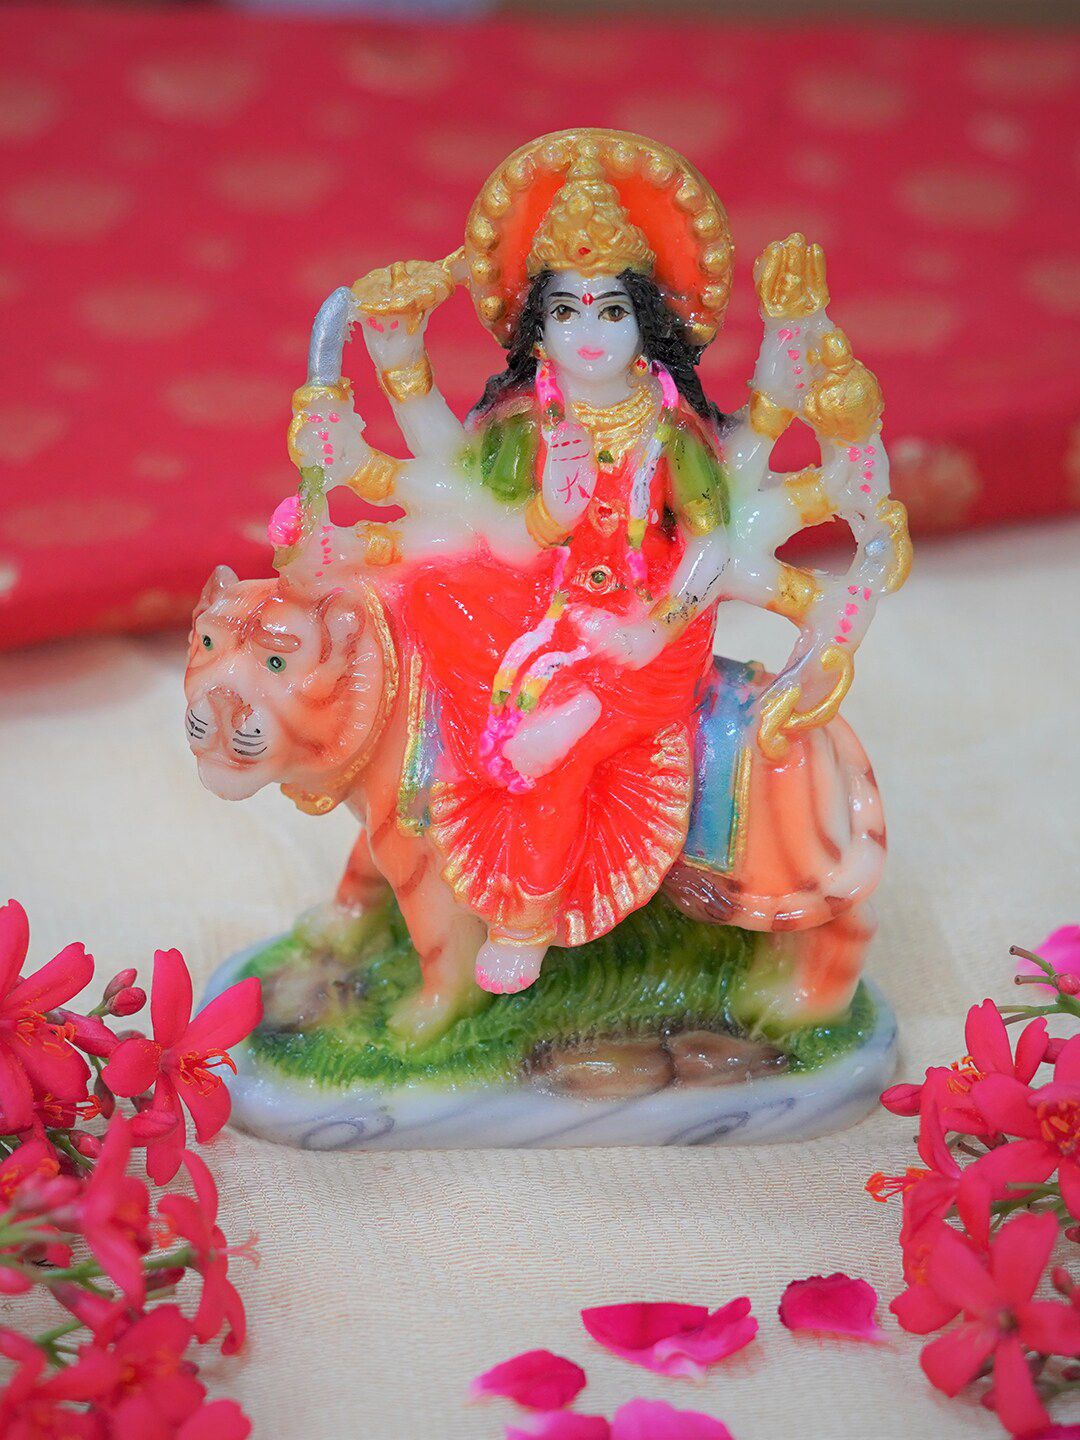 Gallery99 Red & White Goddess Durga Showpiece Price in India